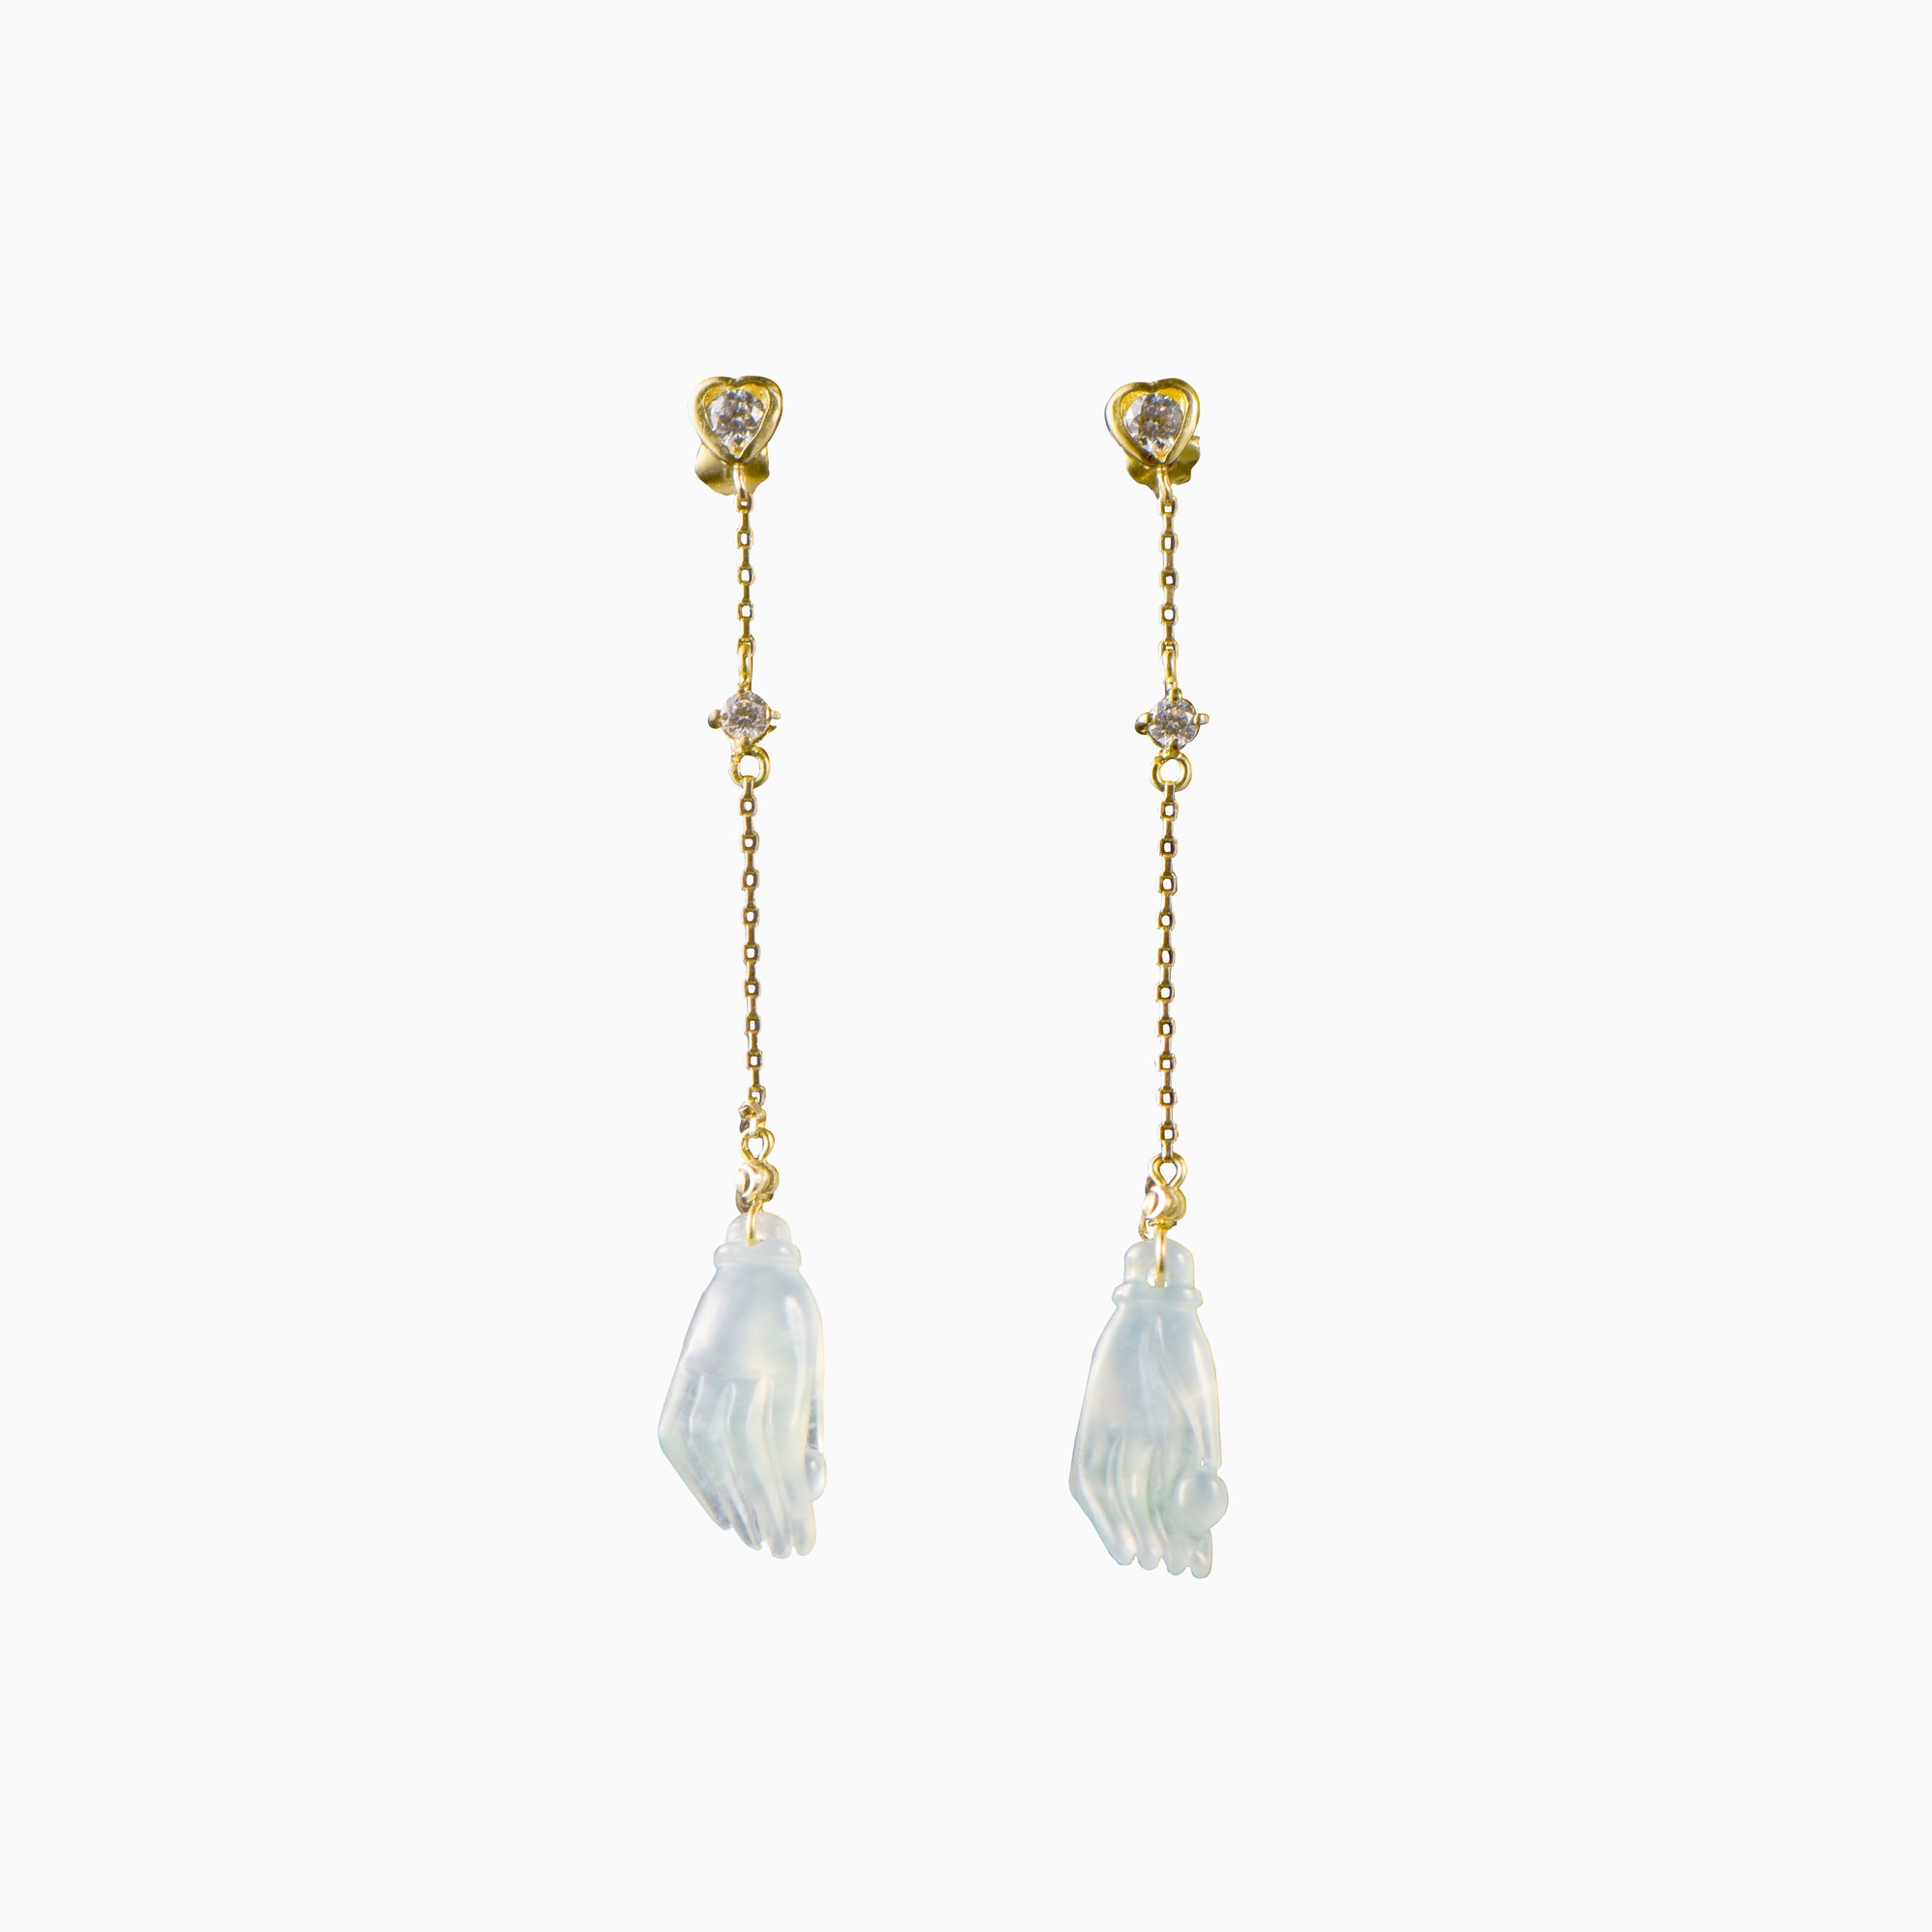 White jadeite Buddha’s hand earrings set on a gold chain with one single stud diamond